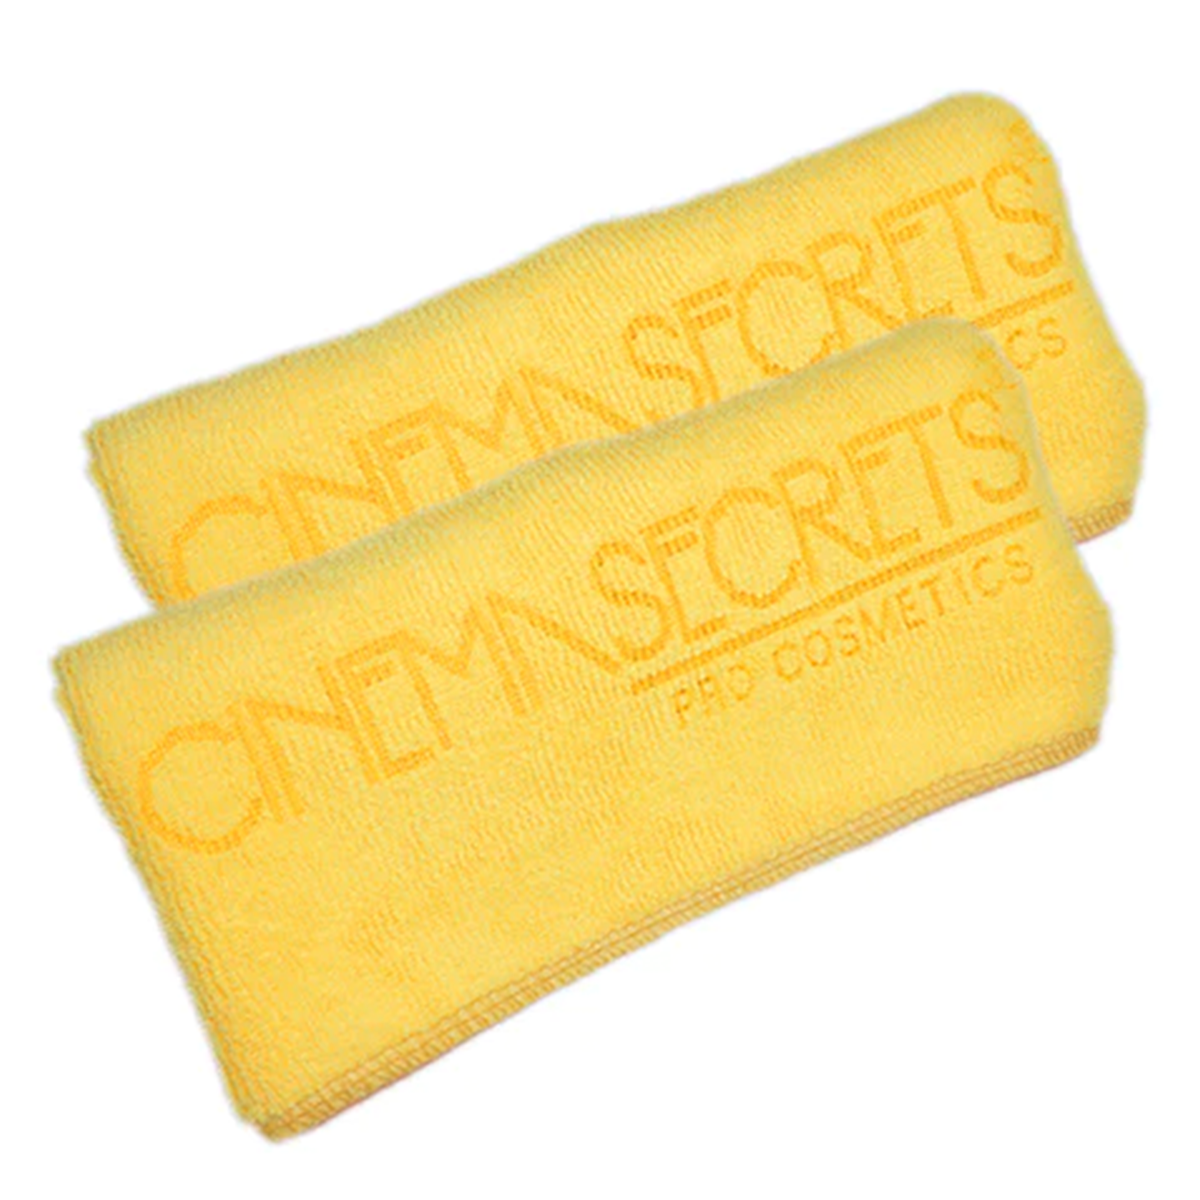 Microfiber Brush Cleaning Towel Yellow